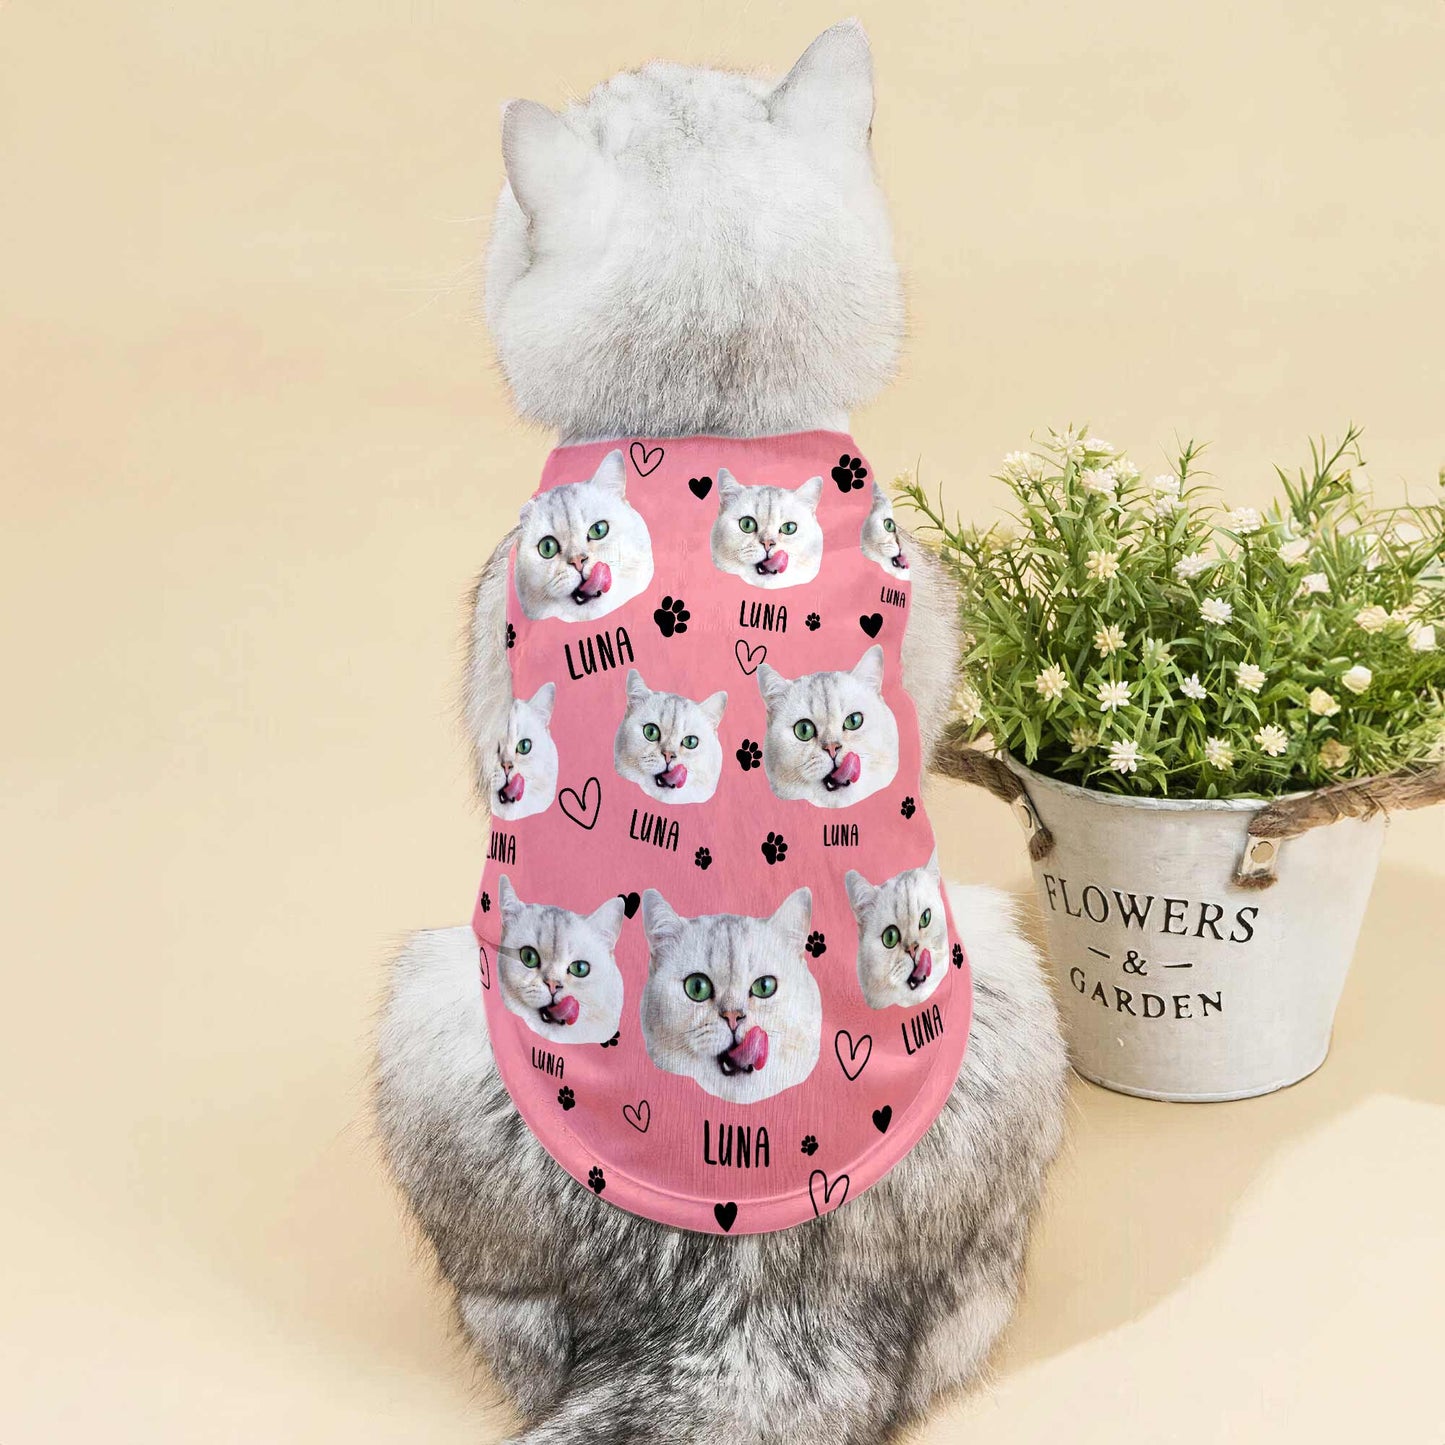 Funny Pet Face - Personalized Photo Pet Shirt